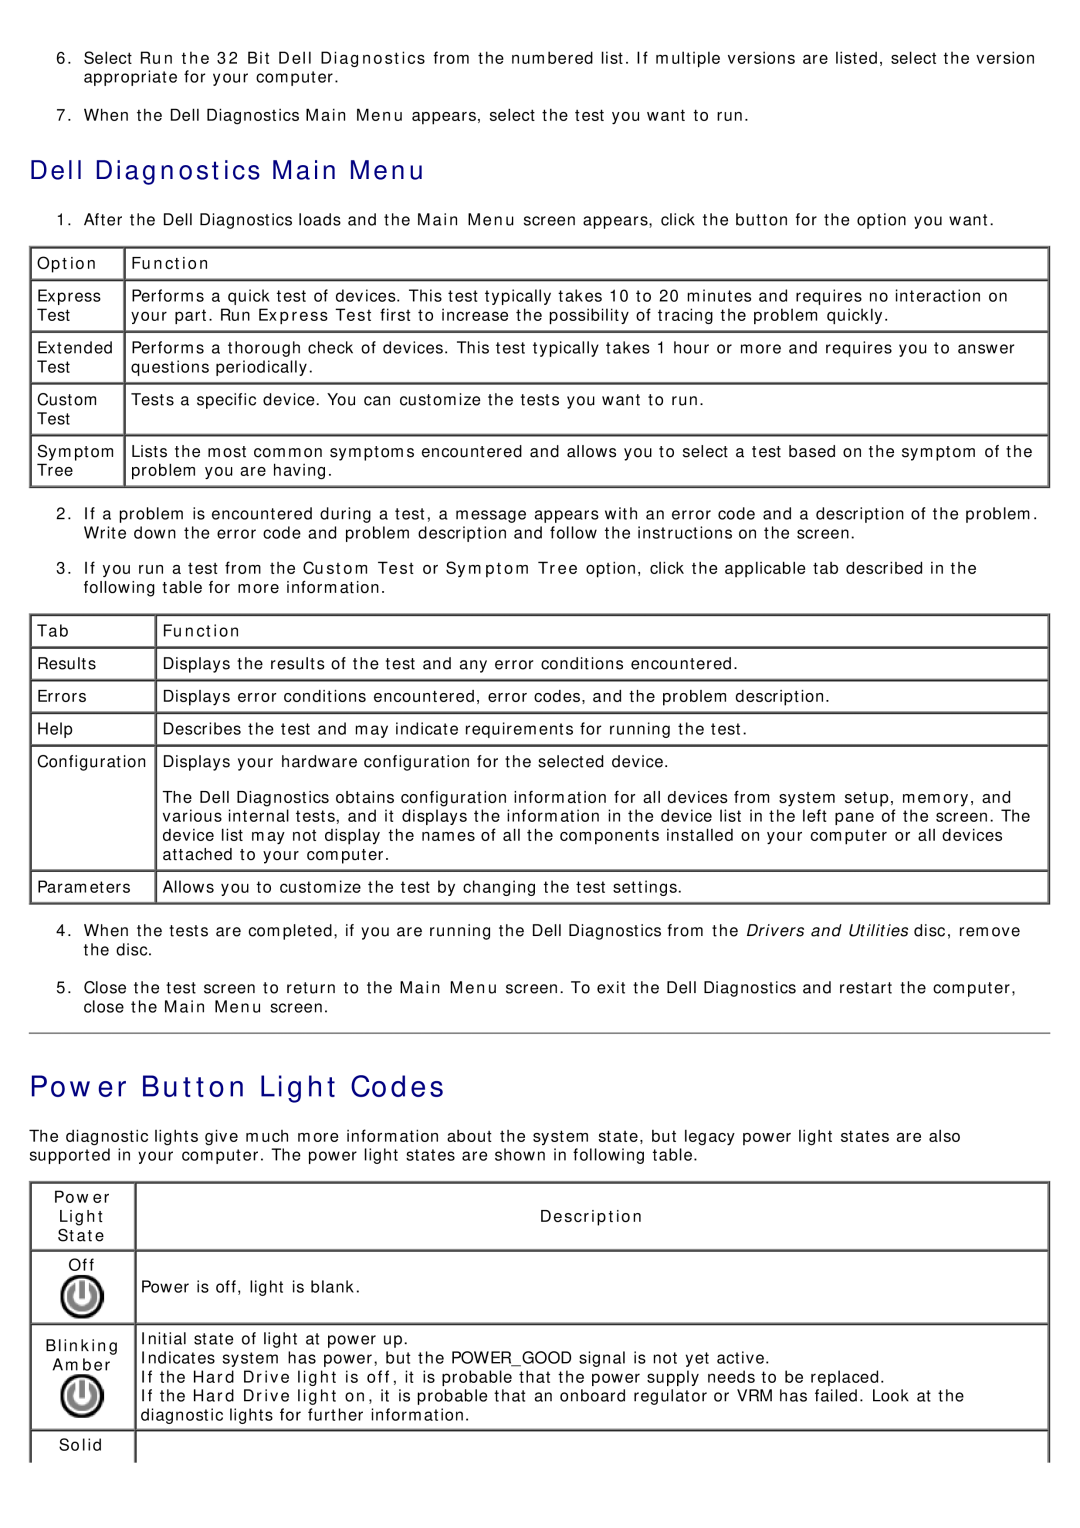 Dell 780 service manual Power Button Light Codes, Dell Diagnostics Main Menu, Option, Function, Description 